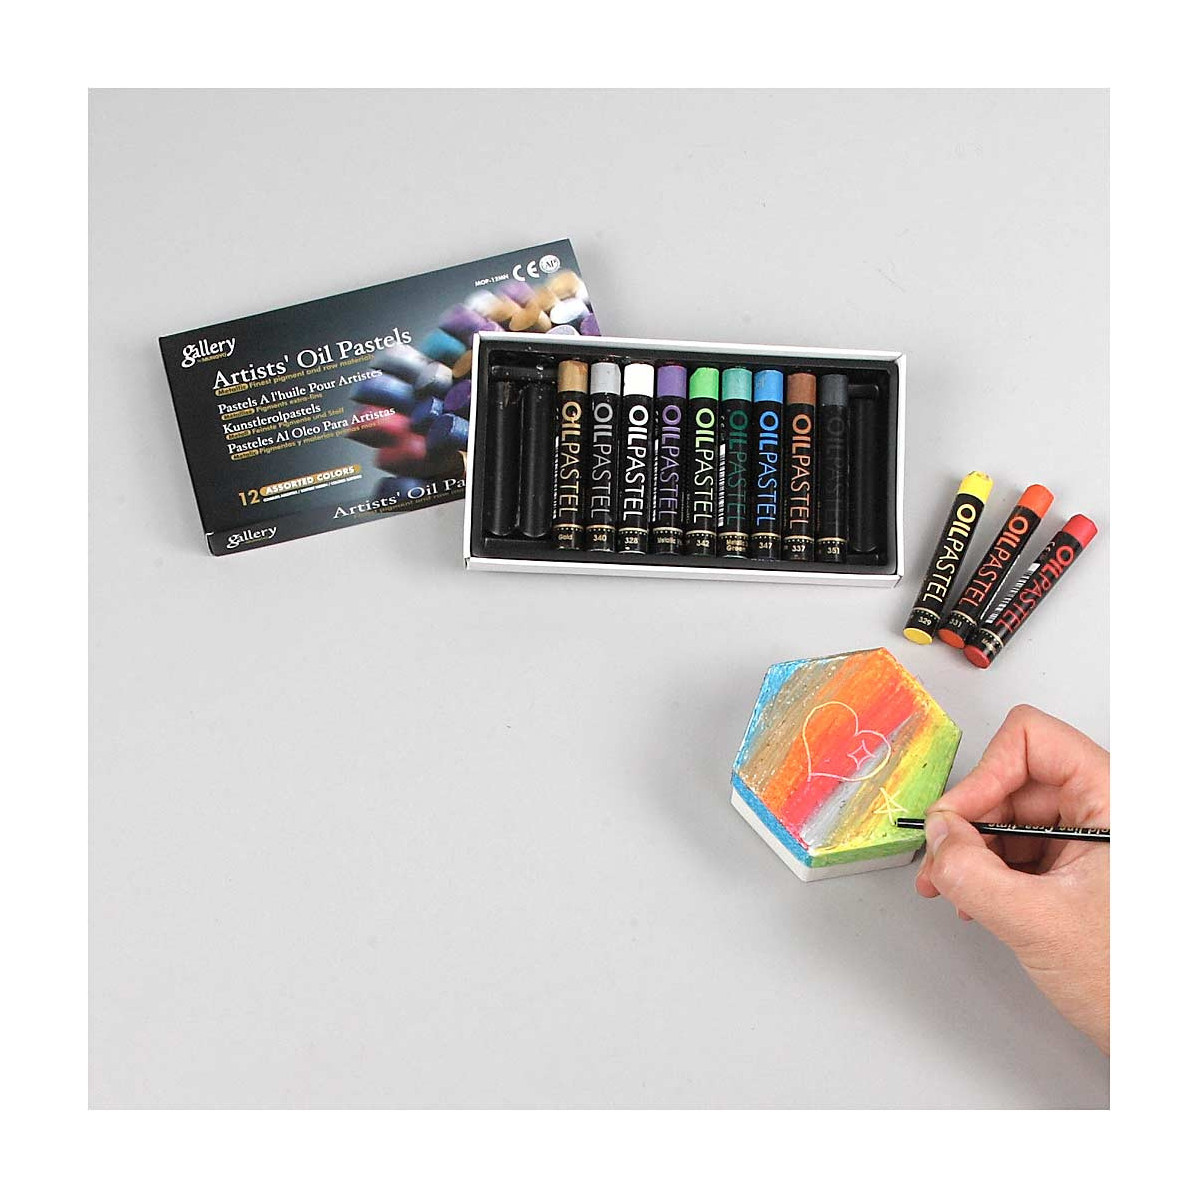 Gallery Oil Pastel Premium, L: 7 cm, 10 mm, Assorted Colours, 12 pc, 1 Pack